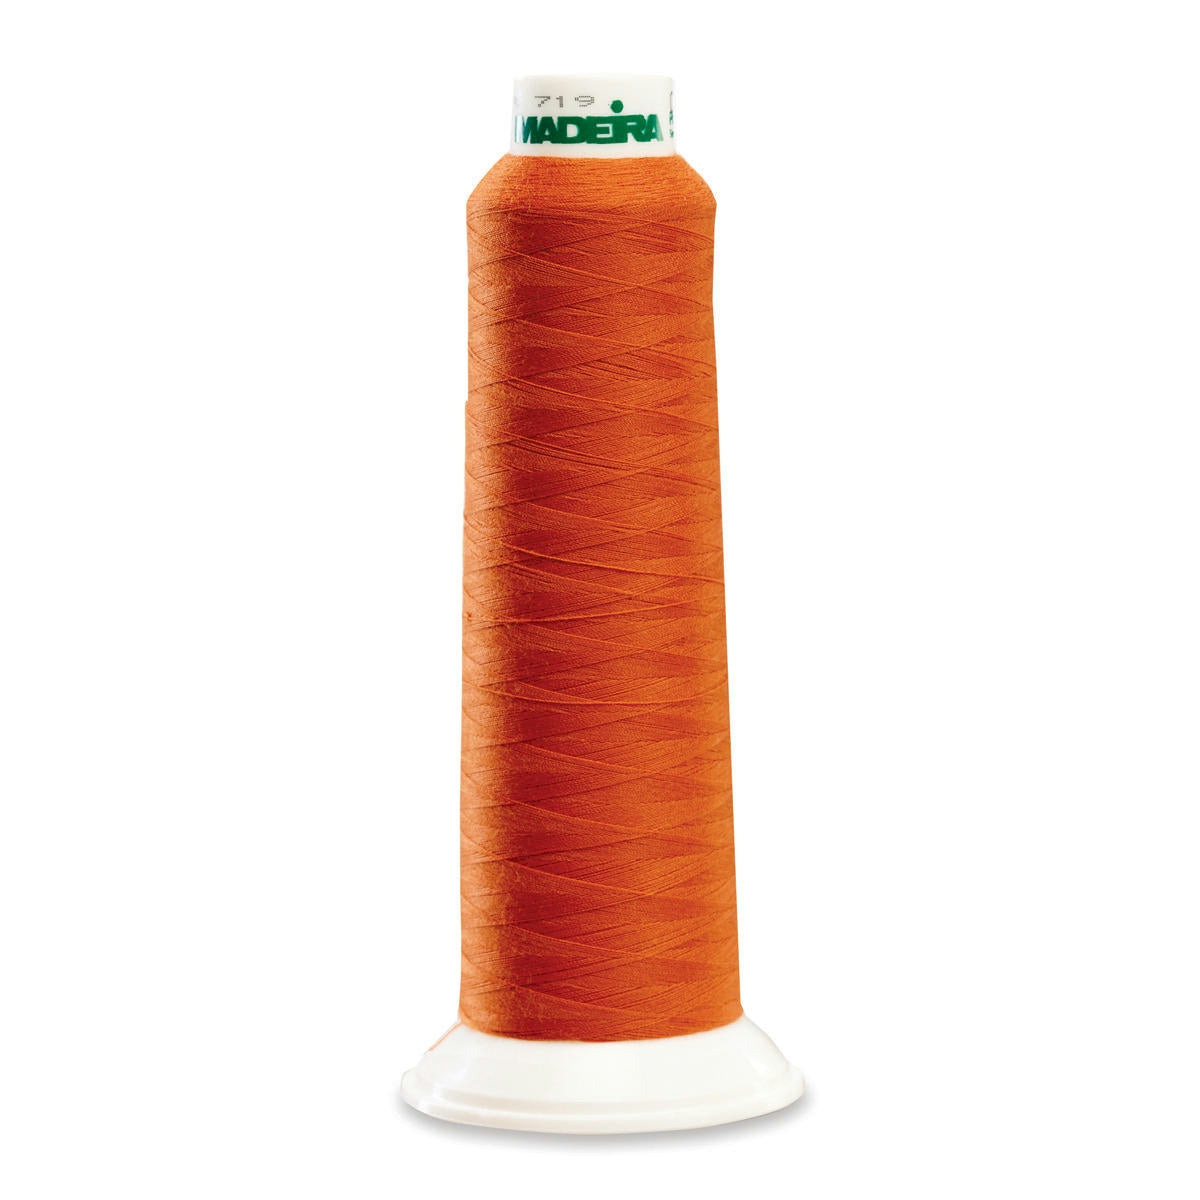 Pumpkin Color, Aerolock Premium Serger Thread, Ref. 8651 by Madeira®